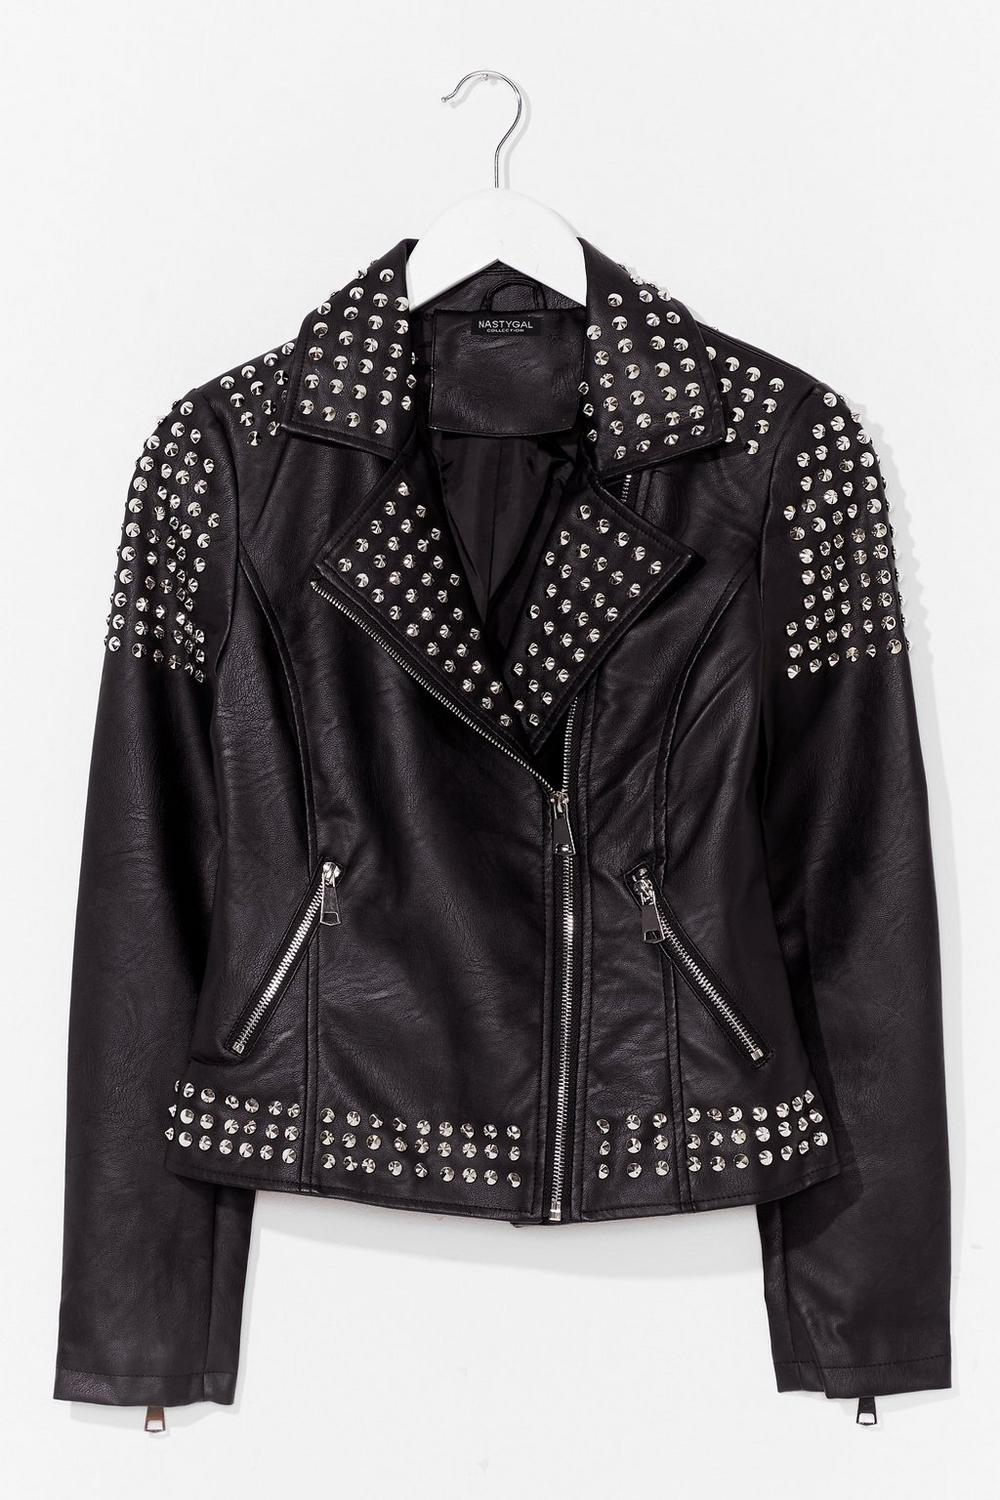 leather jacket ideas